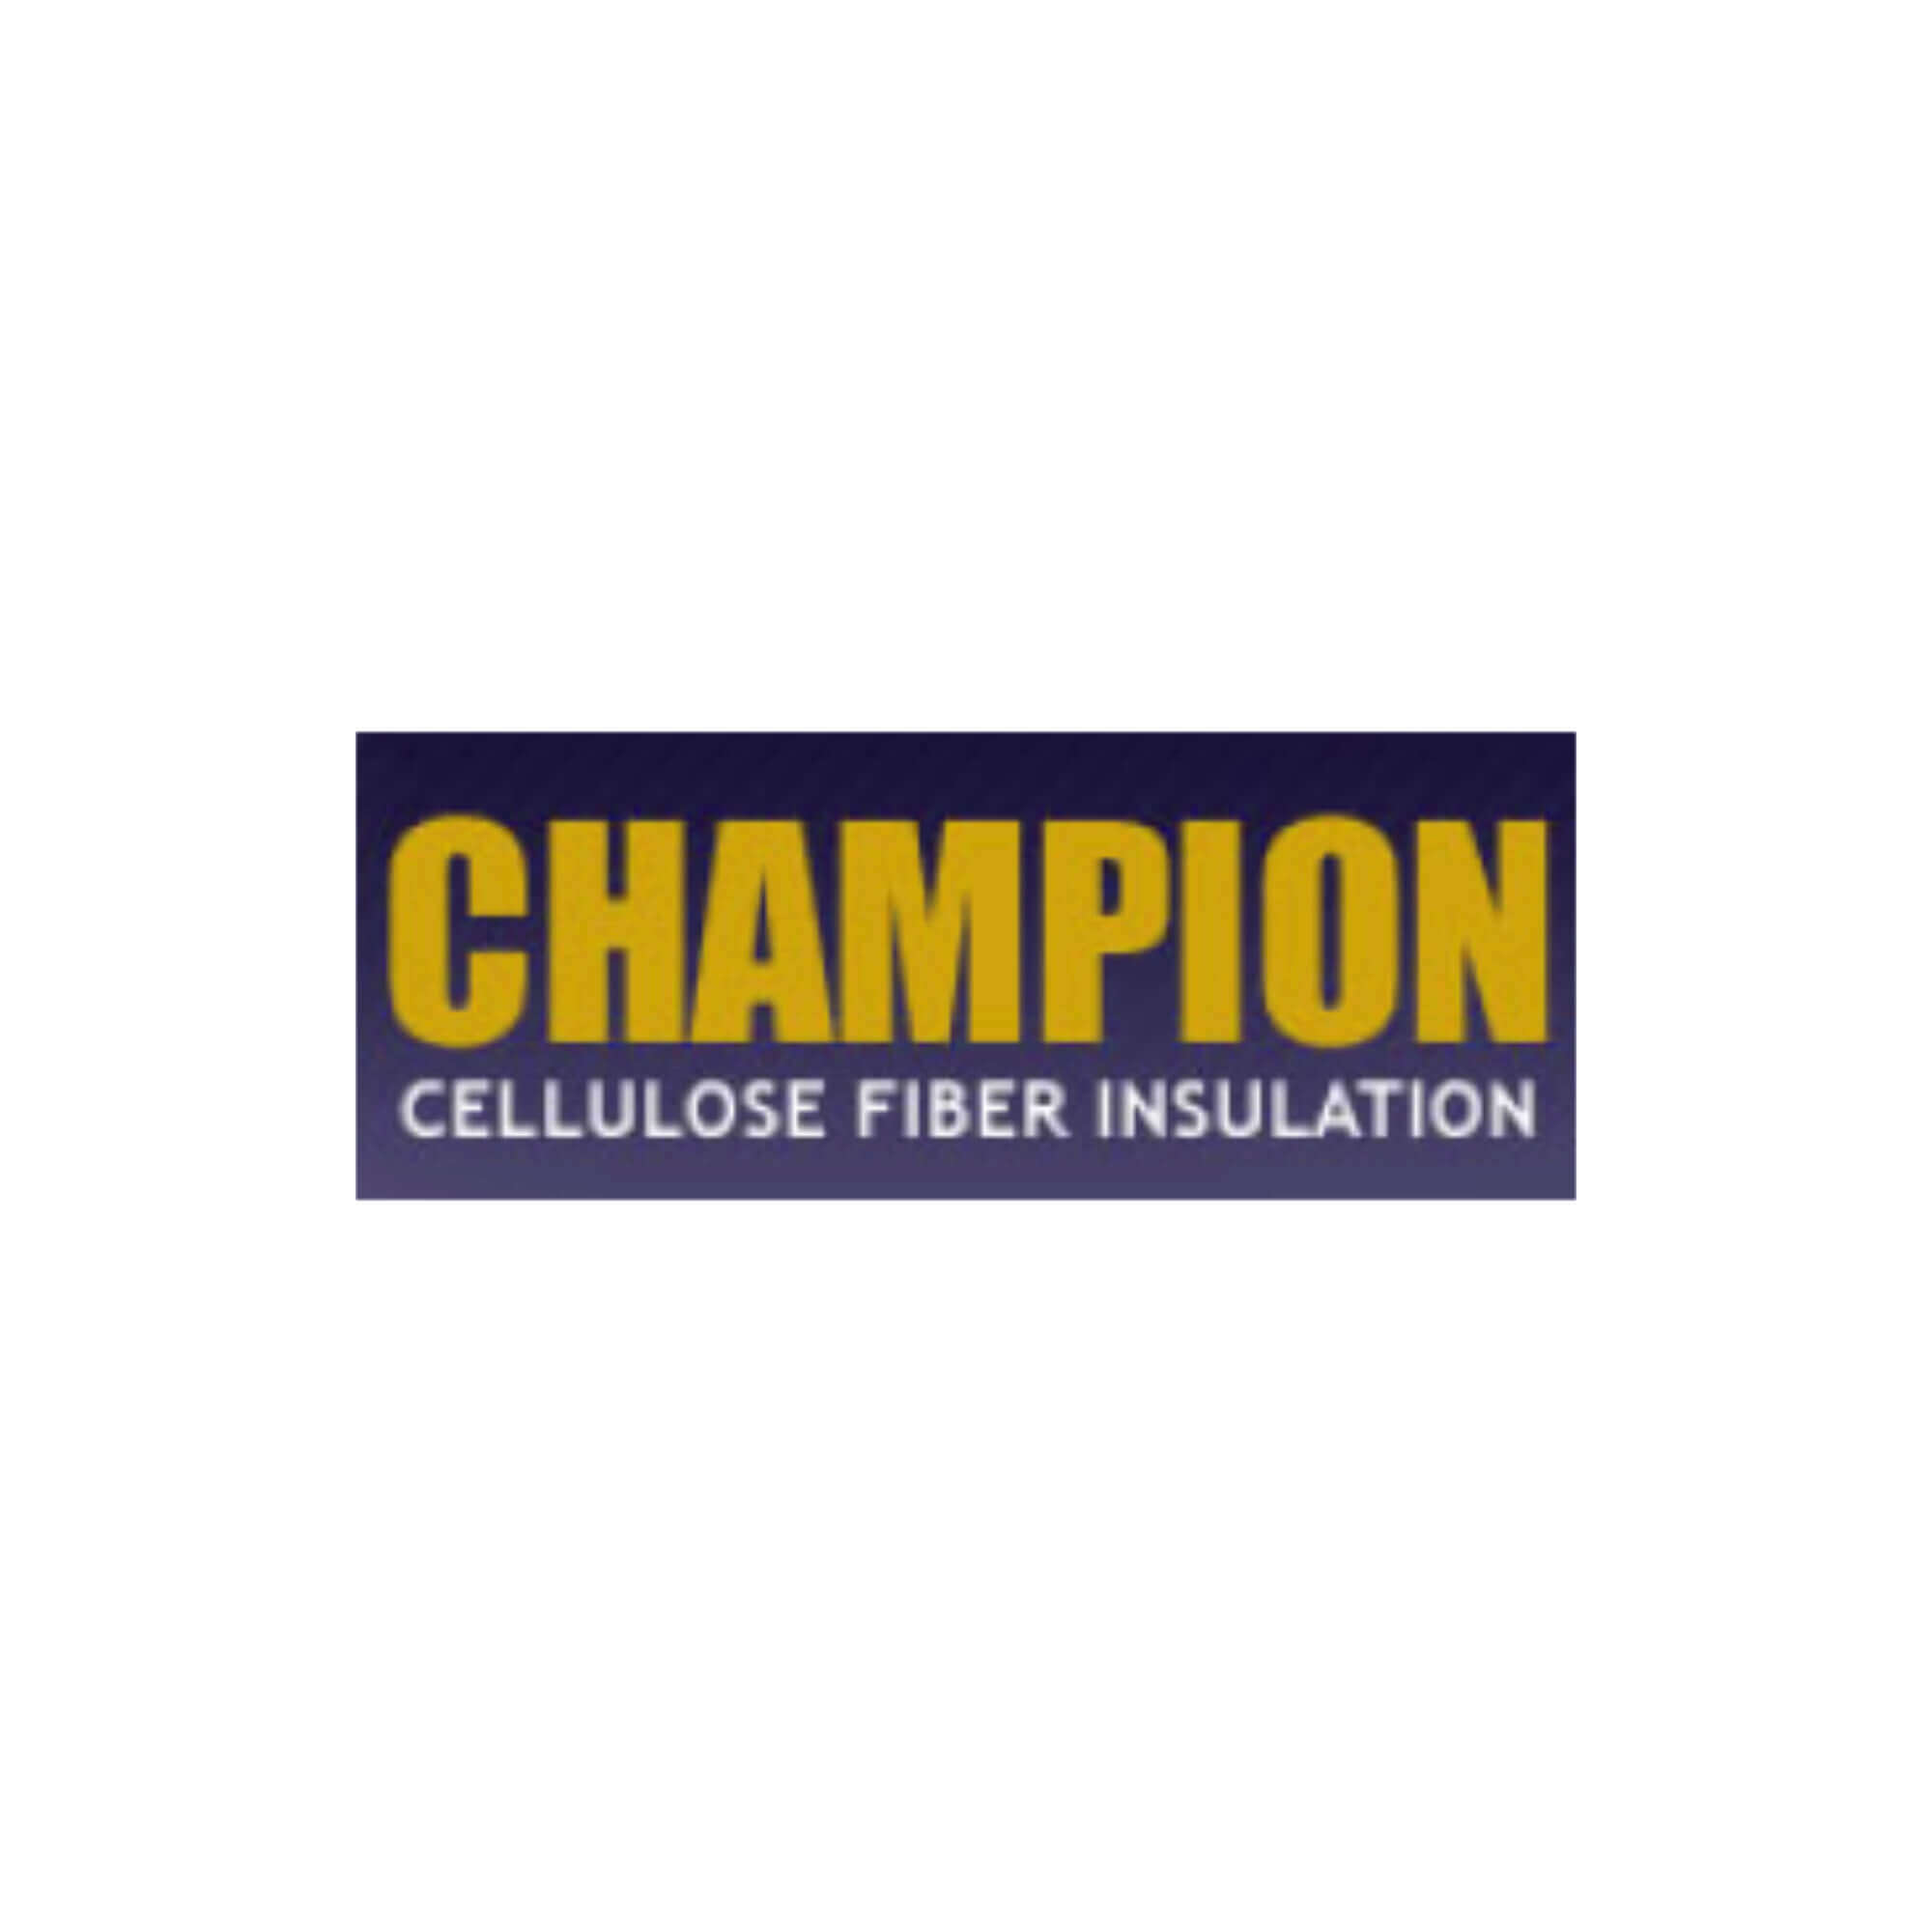 Champion Cllulose Fiber Insulation logo